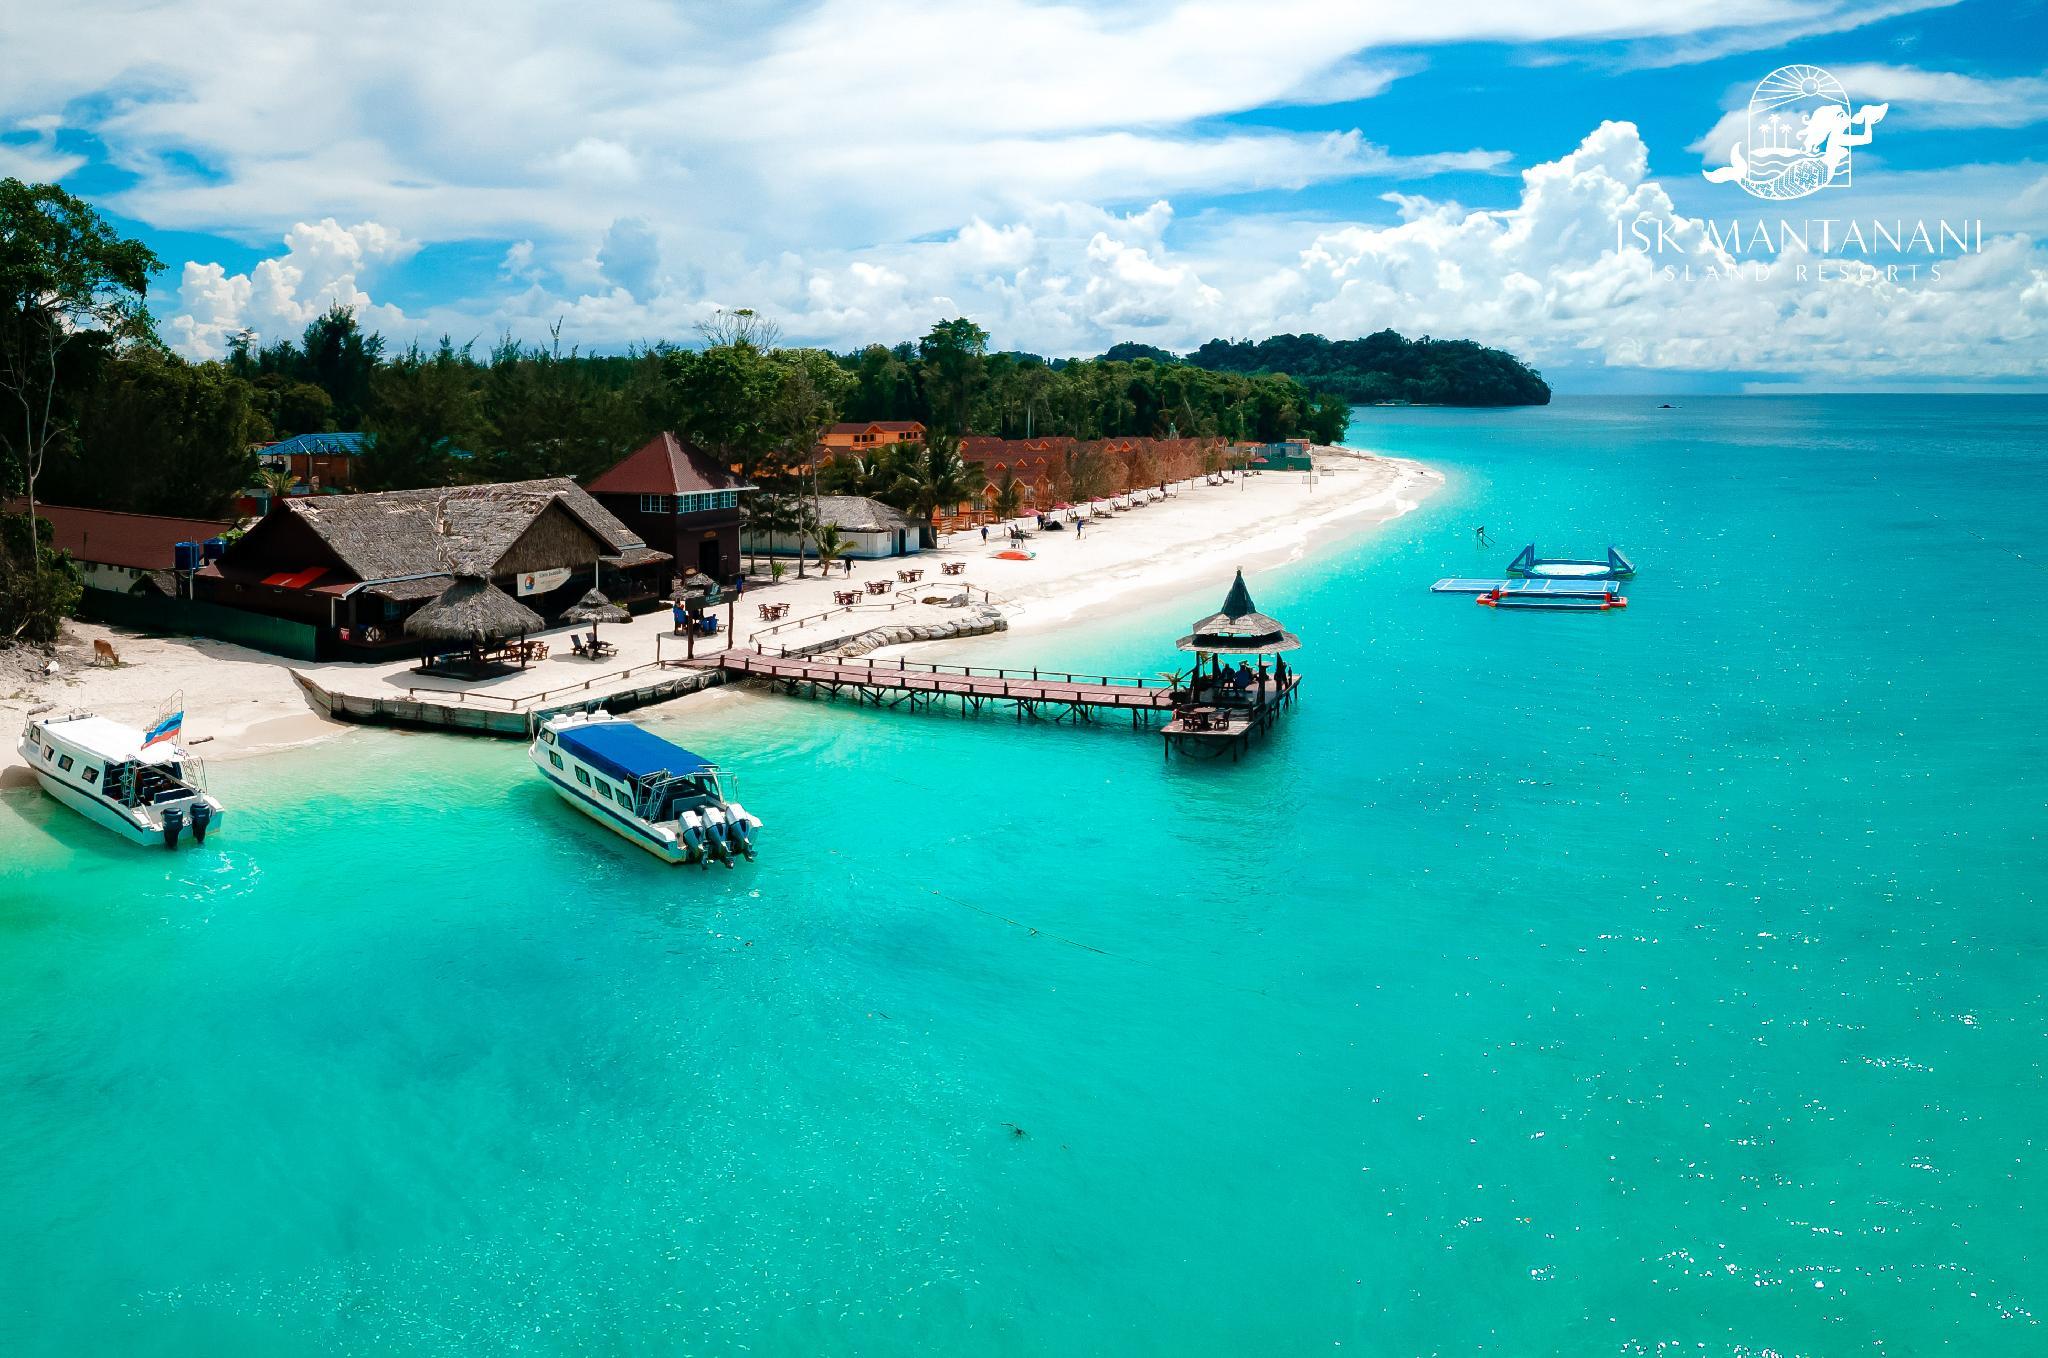 Jsk Mantanani Island Resort - Sabah